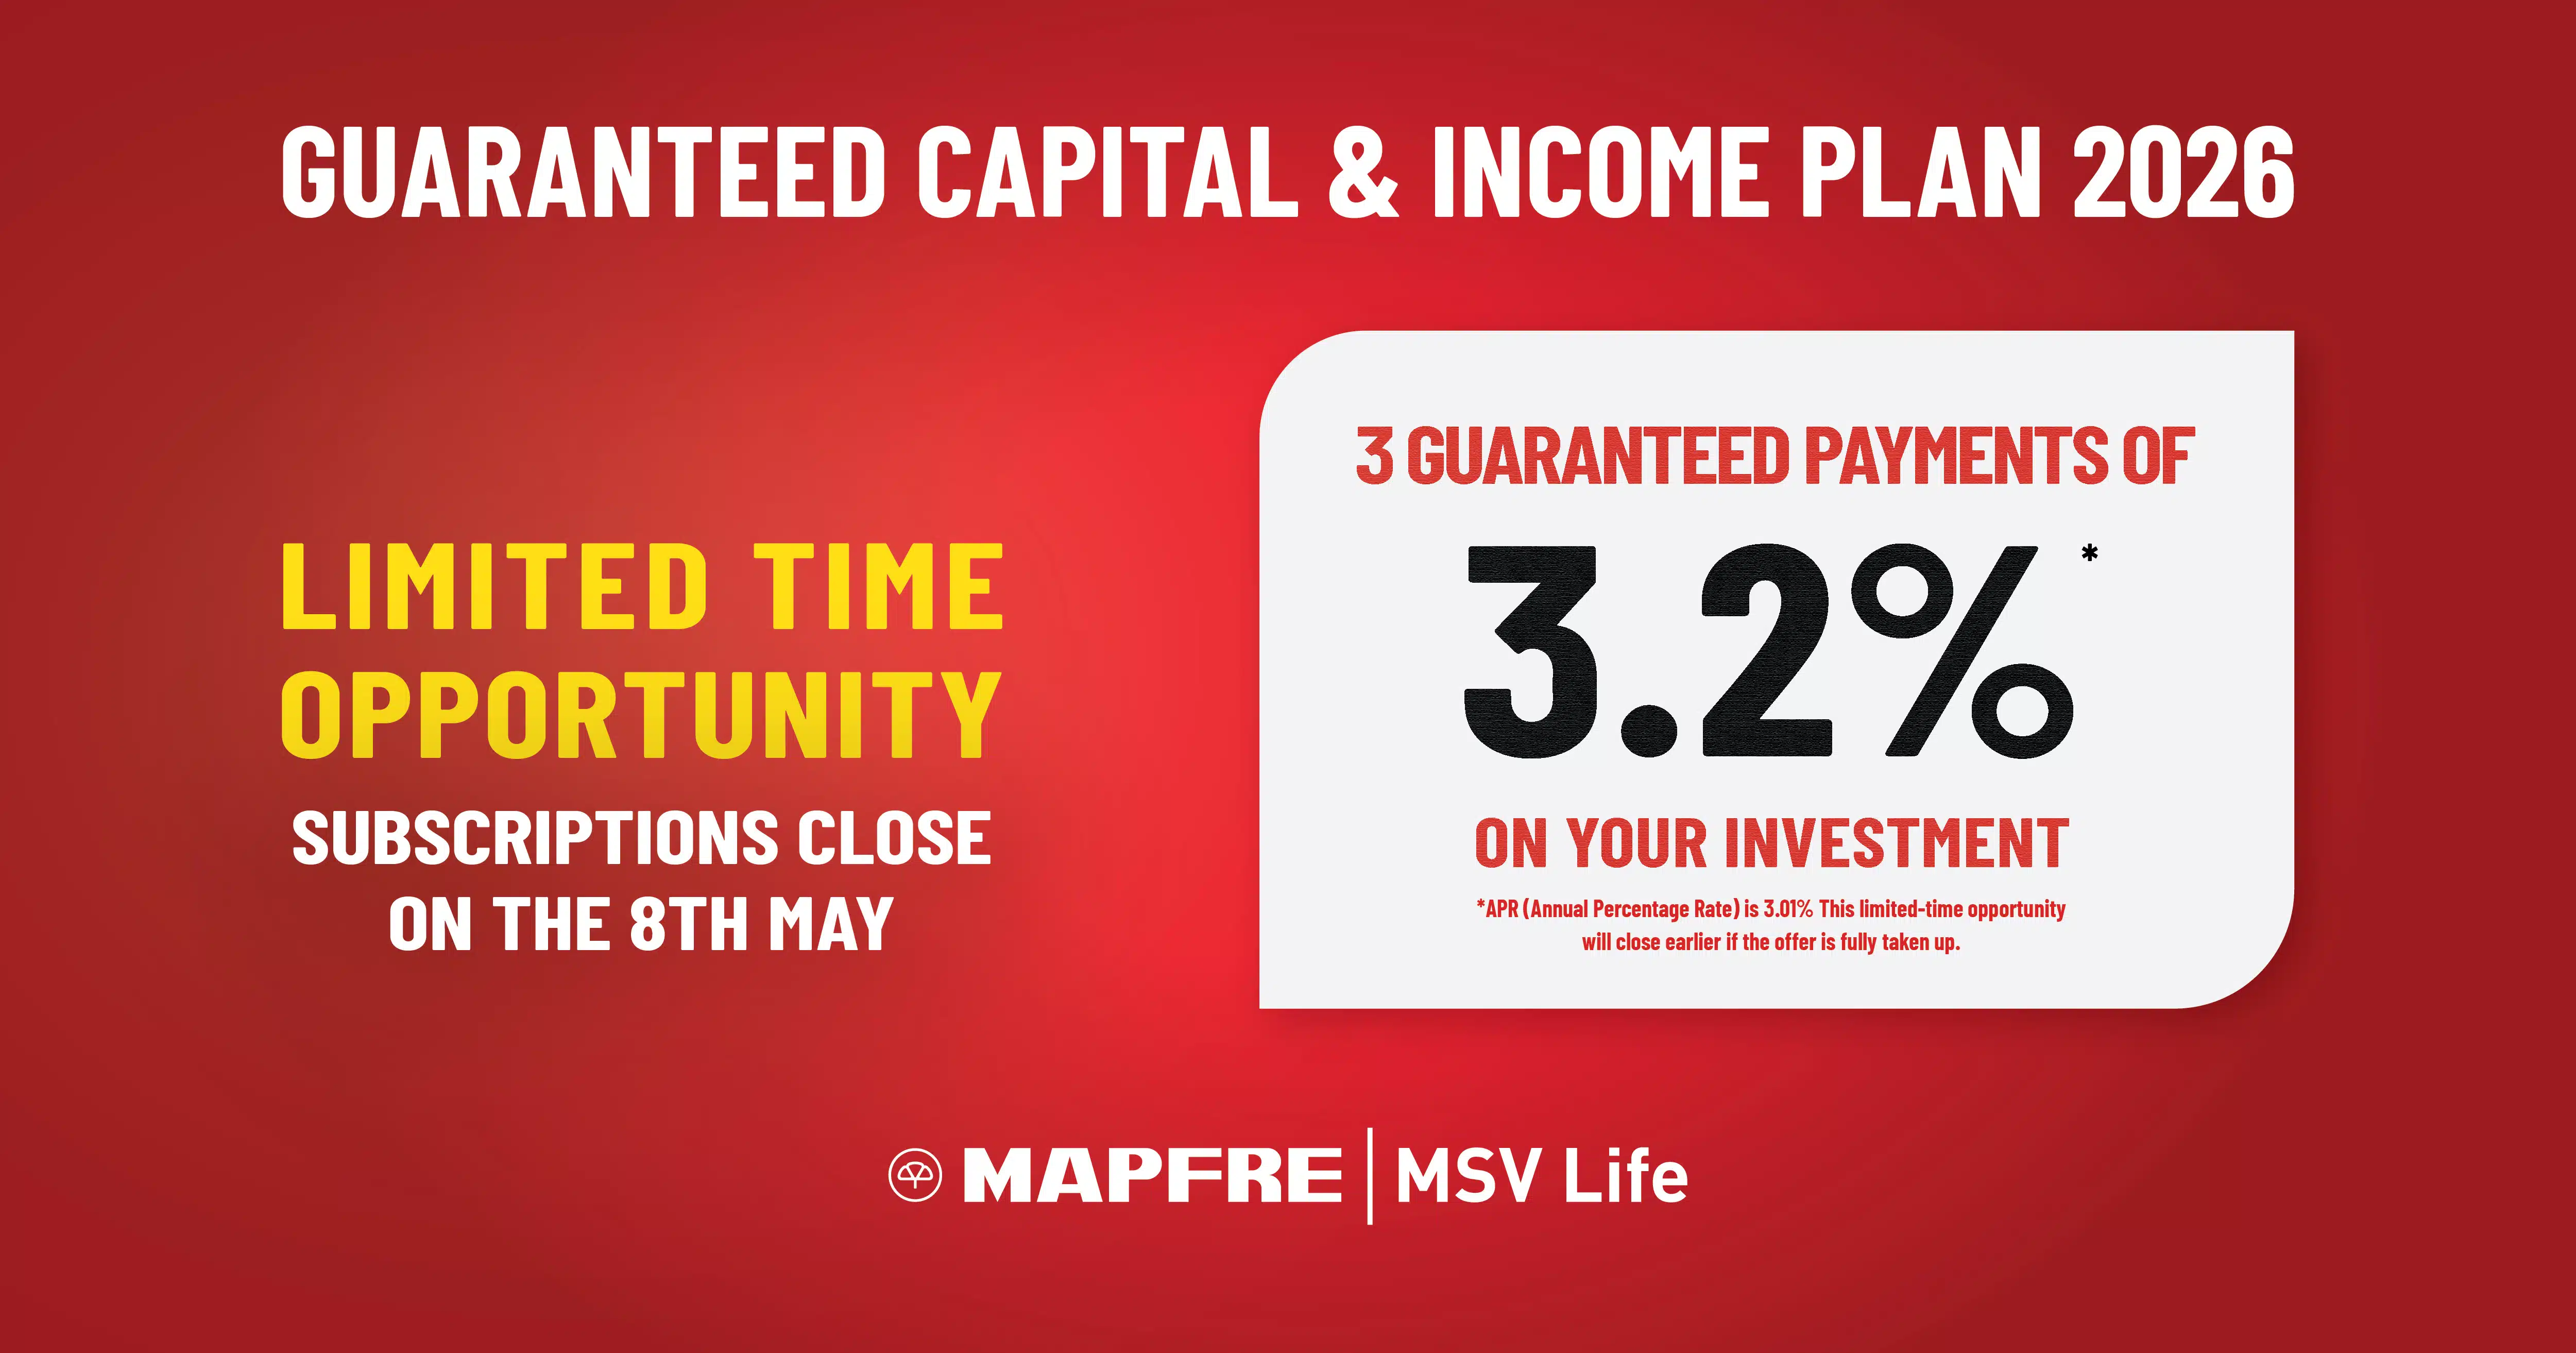 guaranteed capital and income 2026